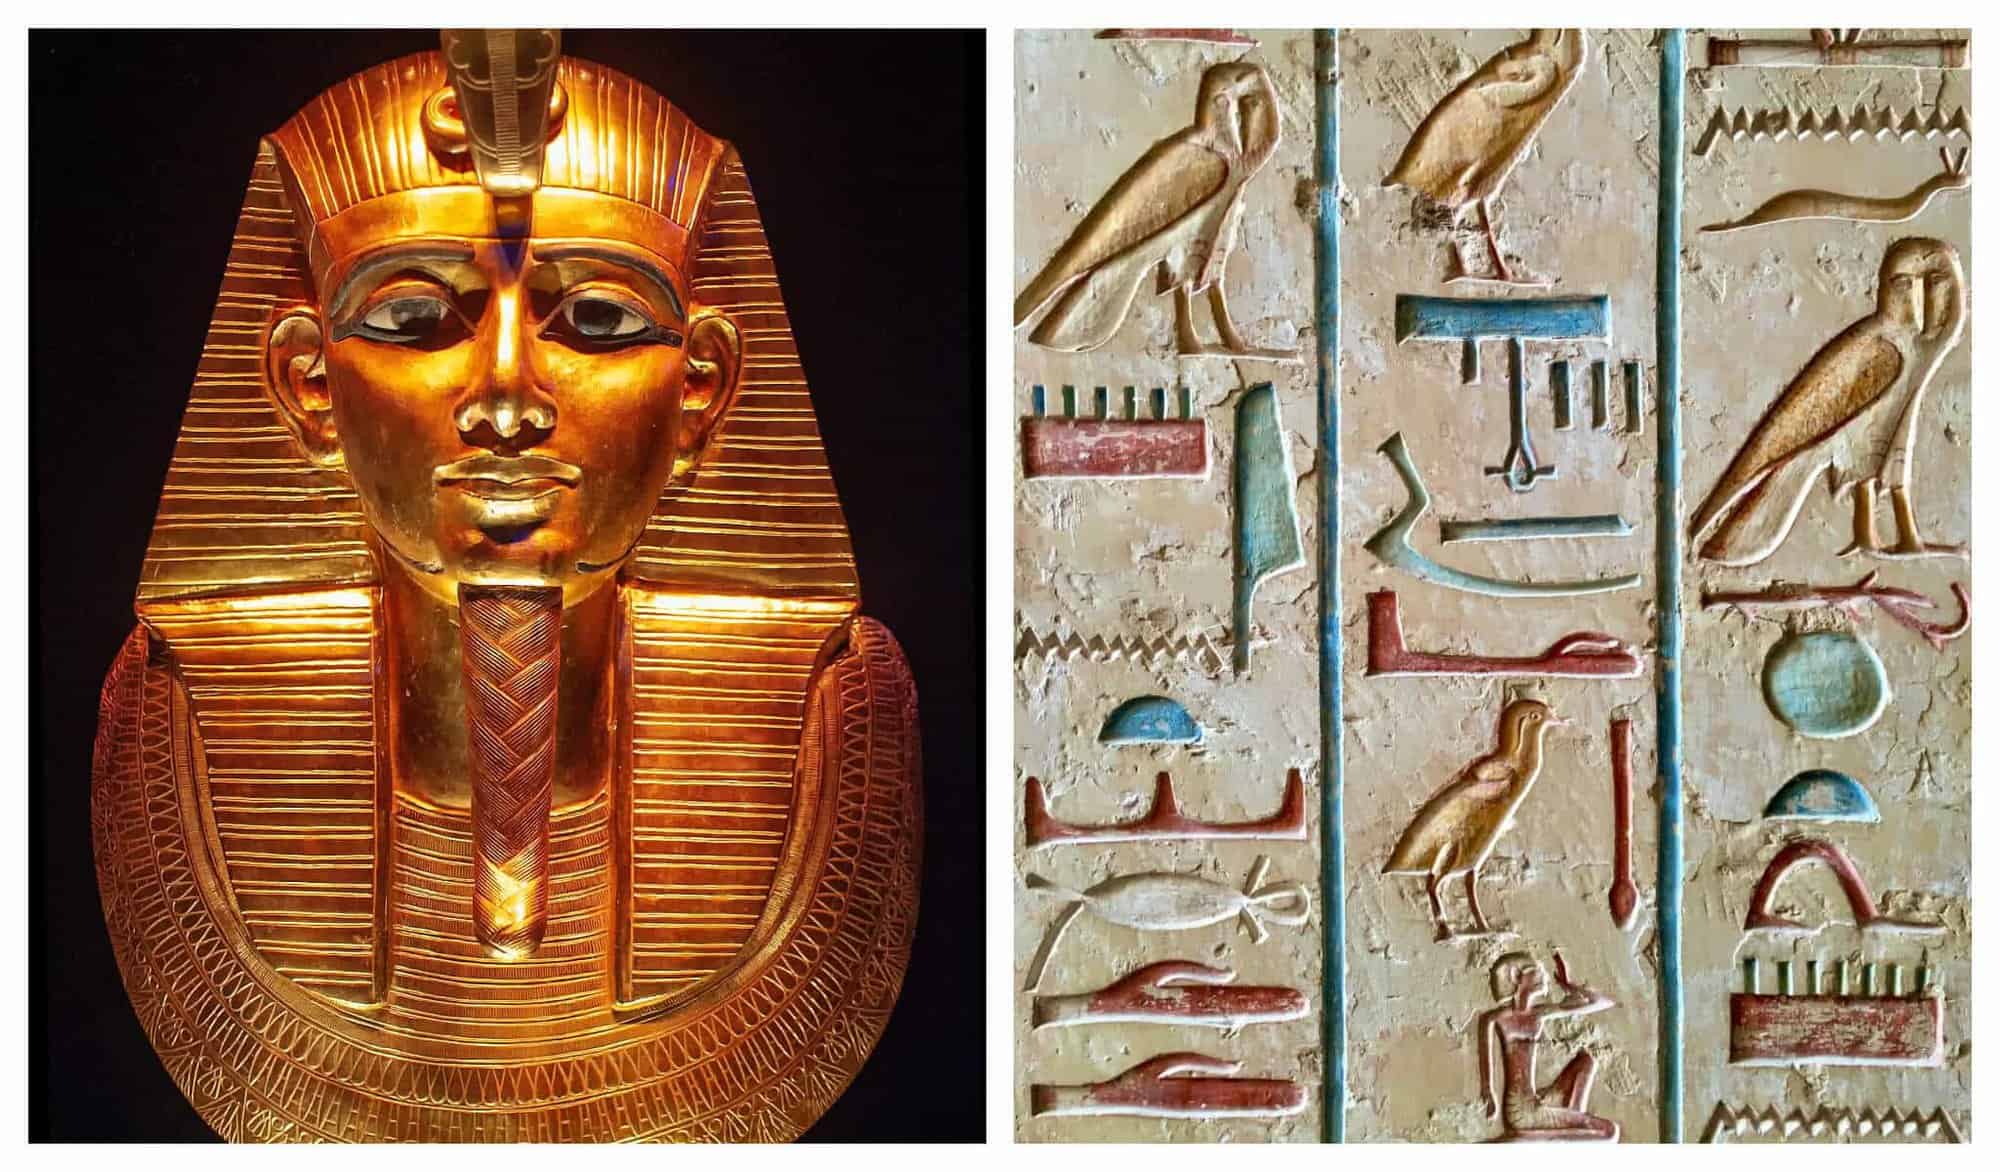 Right: A golden statue of an Egyptian pharaoh. Right: A set of Egyptian hieroglyphs.